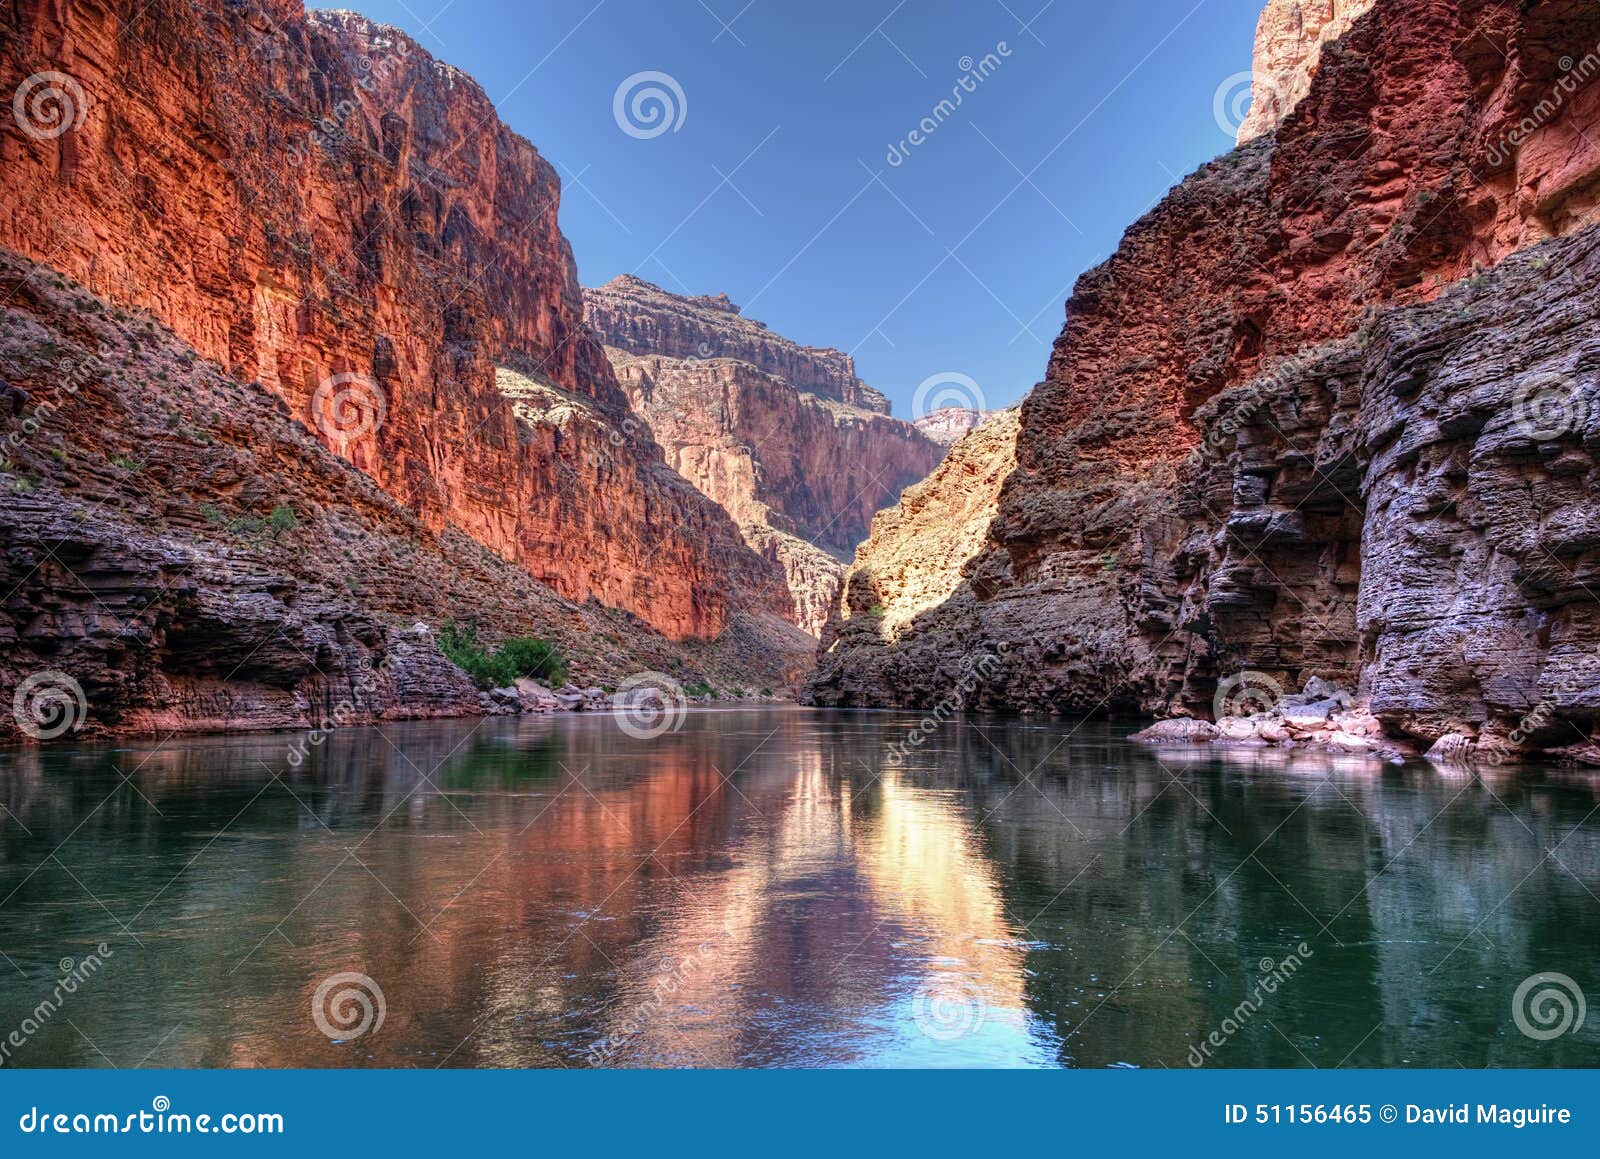 grand canyon refelctions